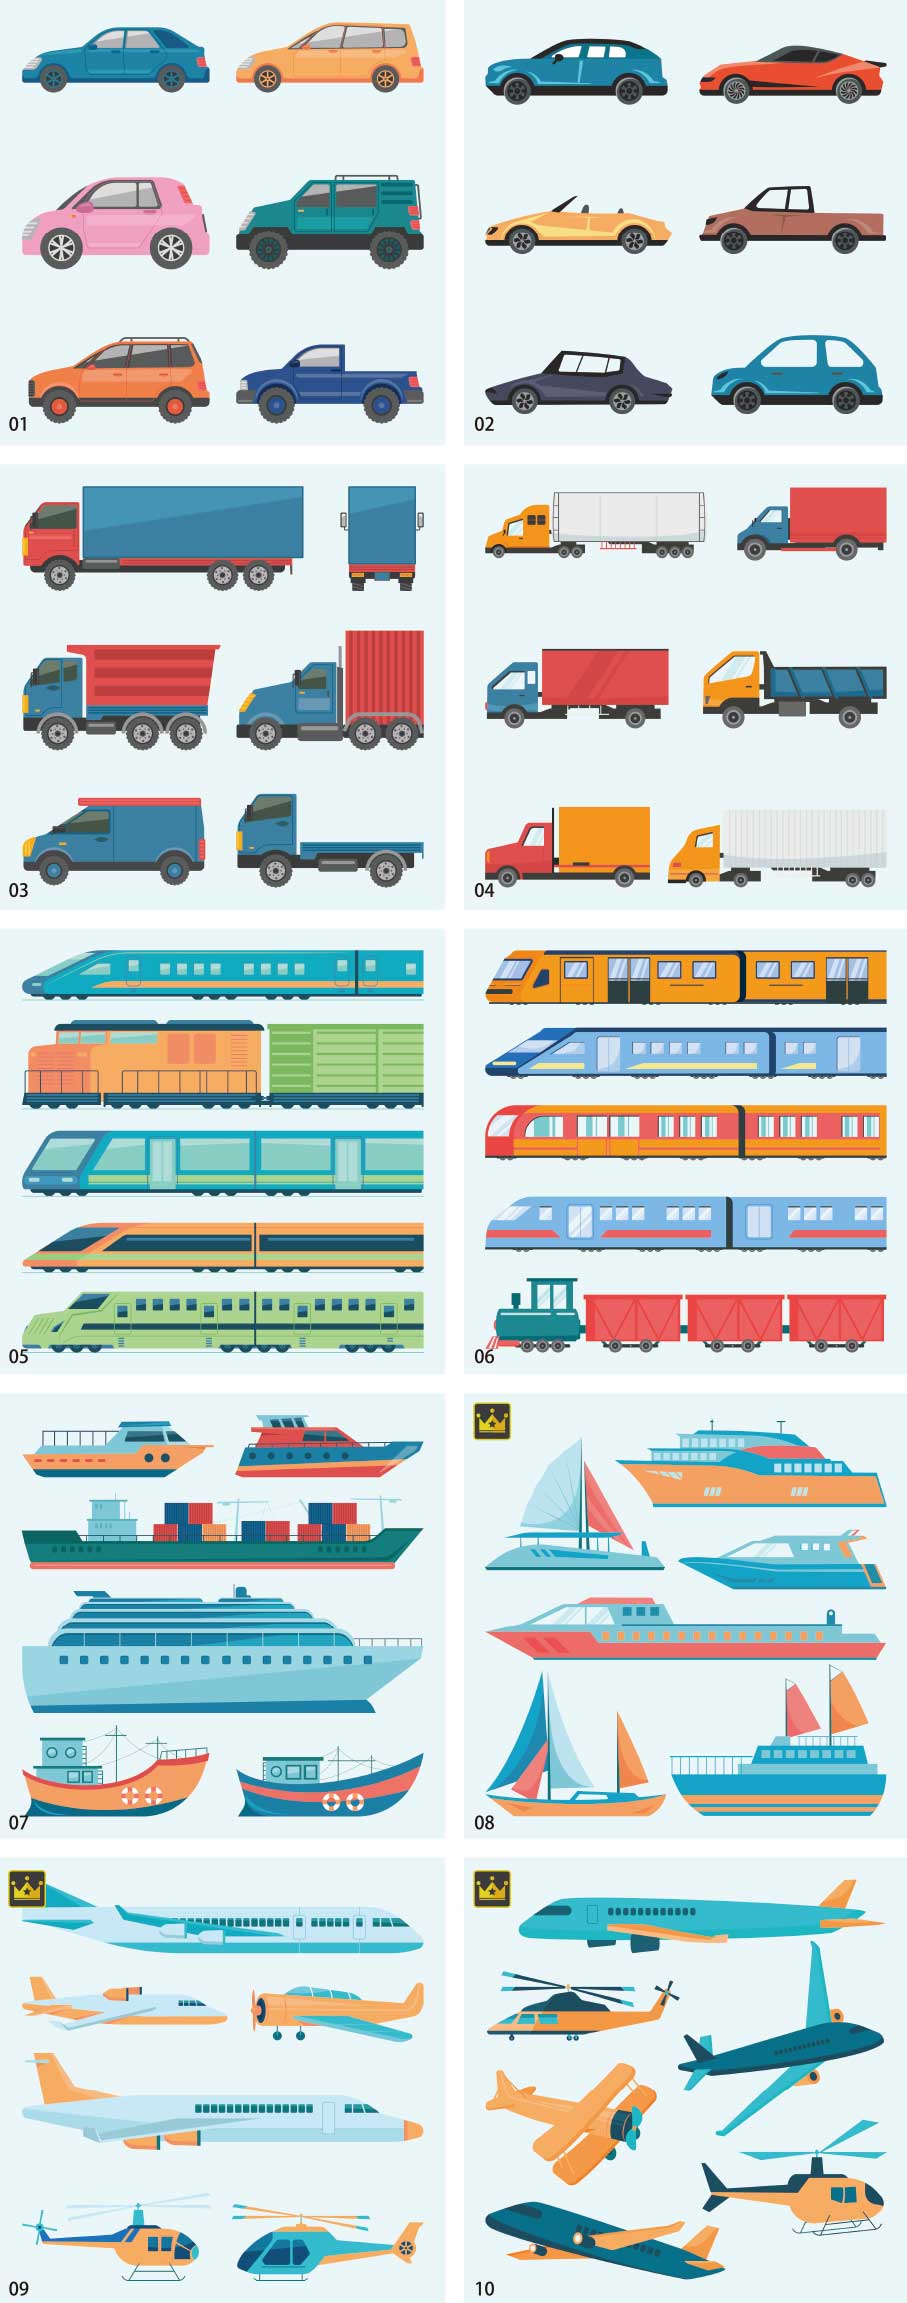 Vehicle illustration collection